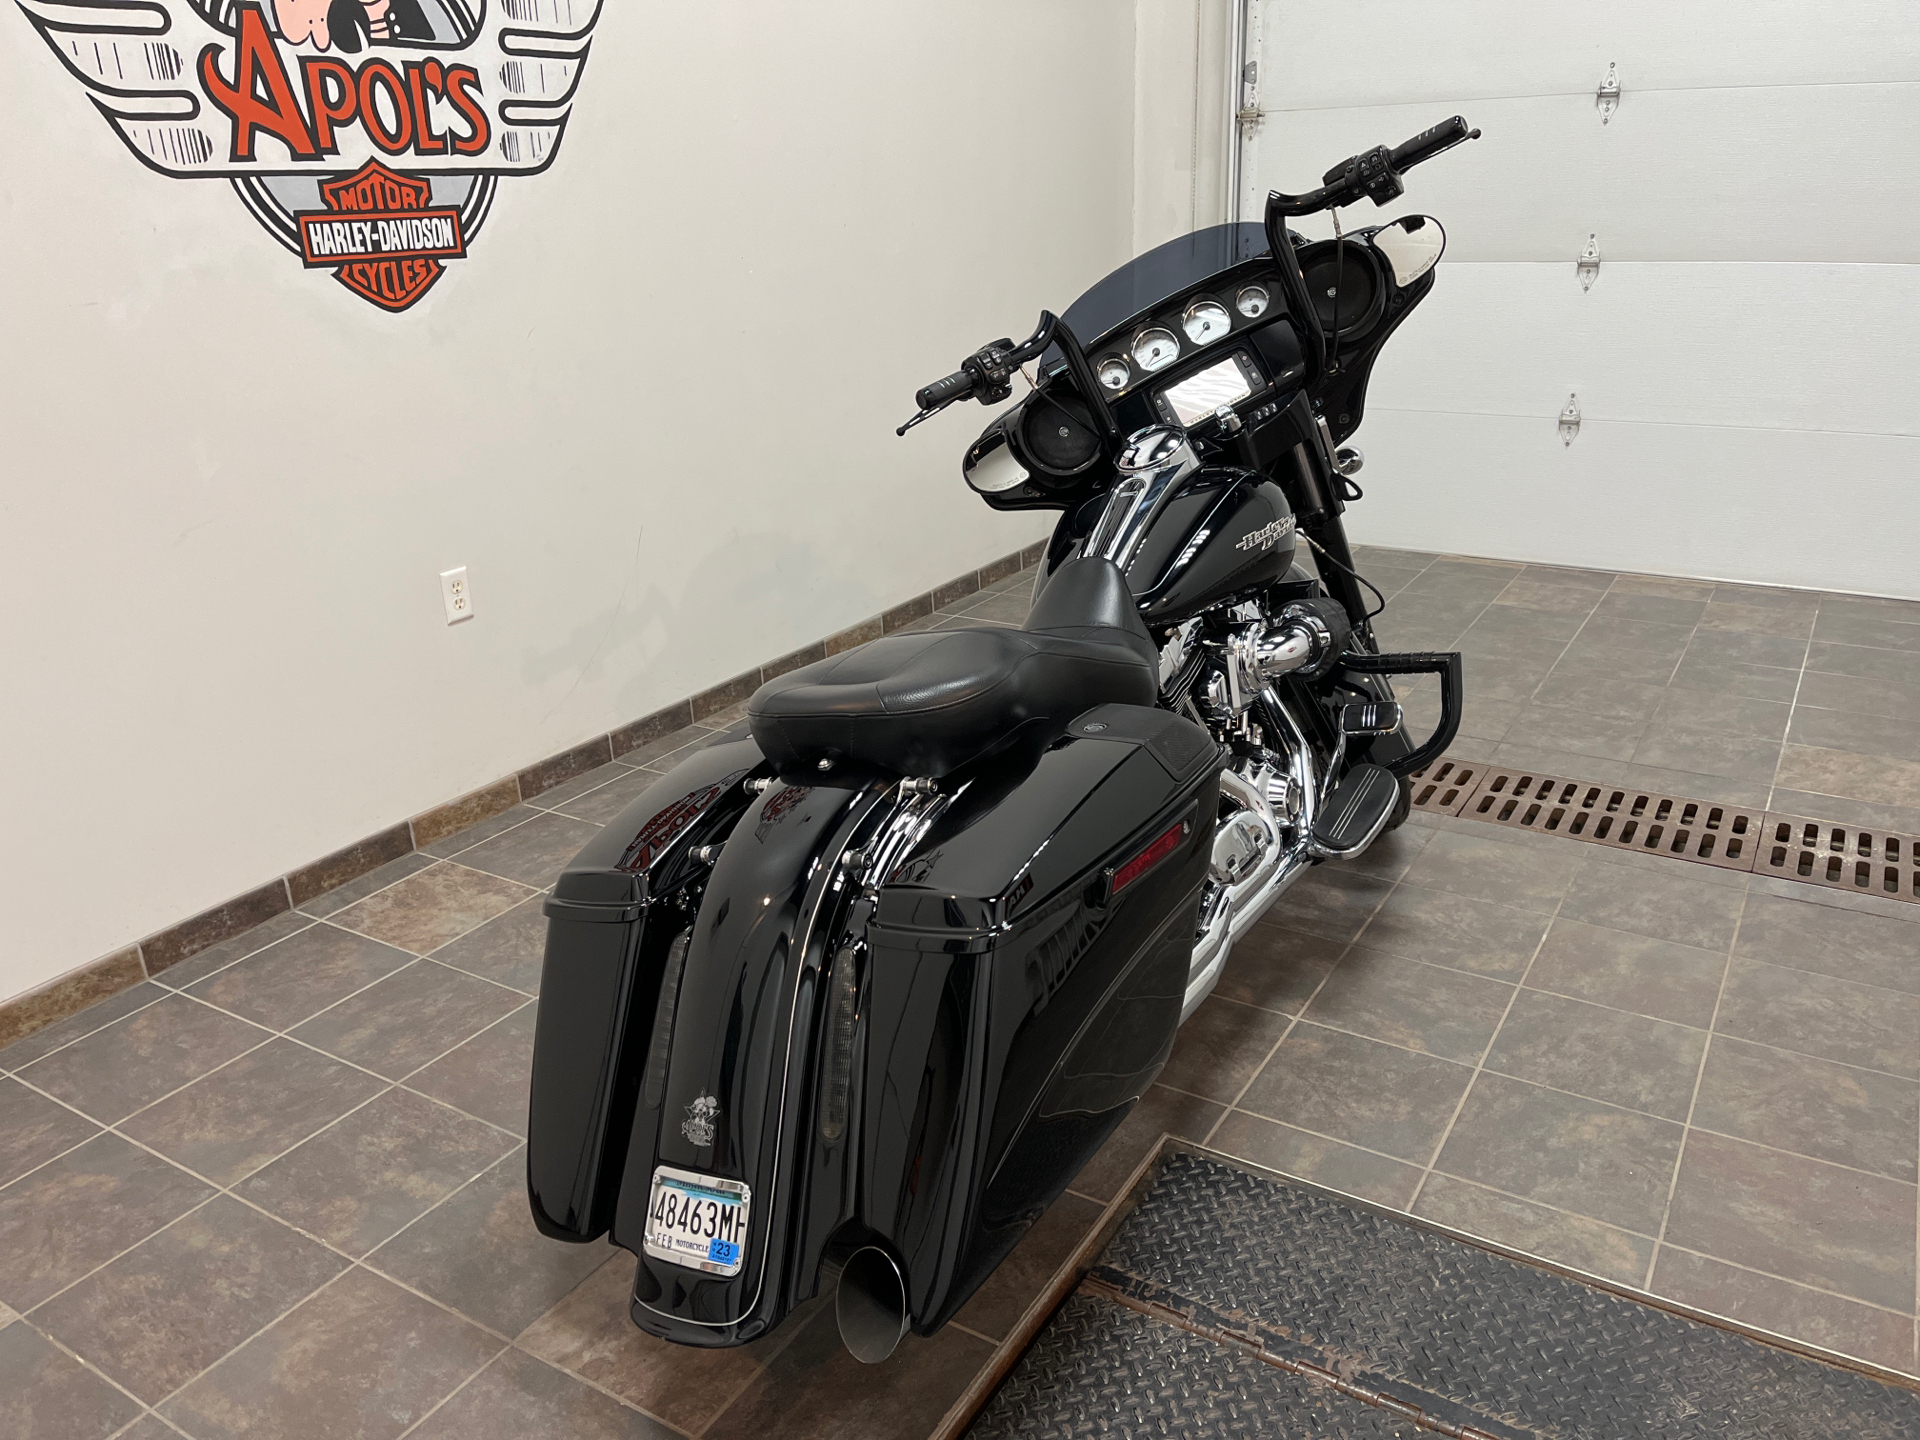 2014 Harley-Davidson Street Glide® Special in Alexandria, Minnesota - Photo 3